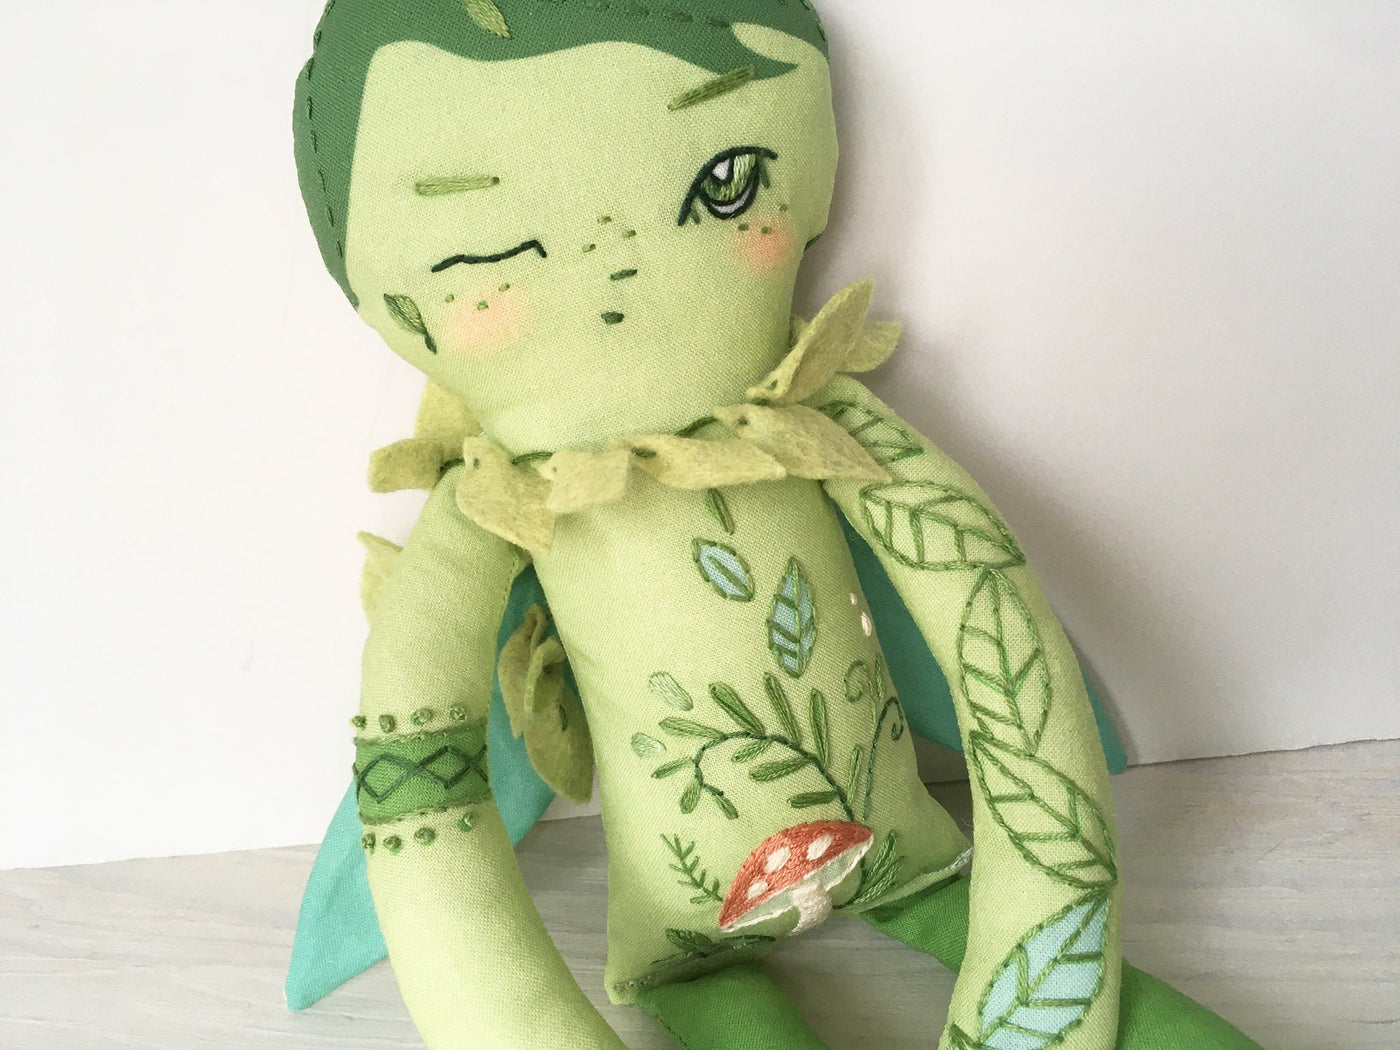 DIY Cut and Sew Fern the Leaf Faery cloth doll with embroidery